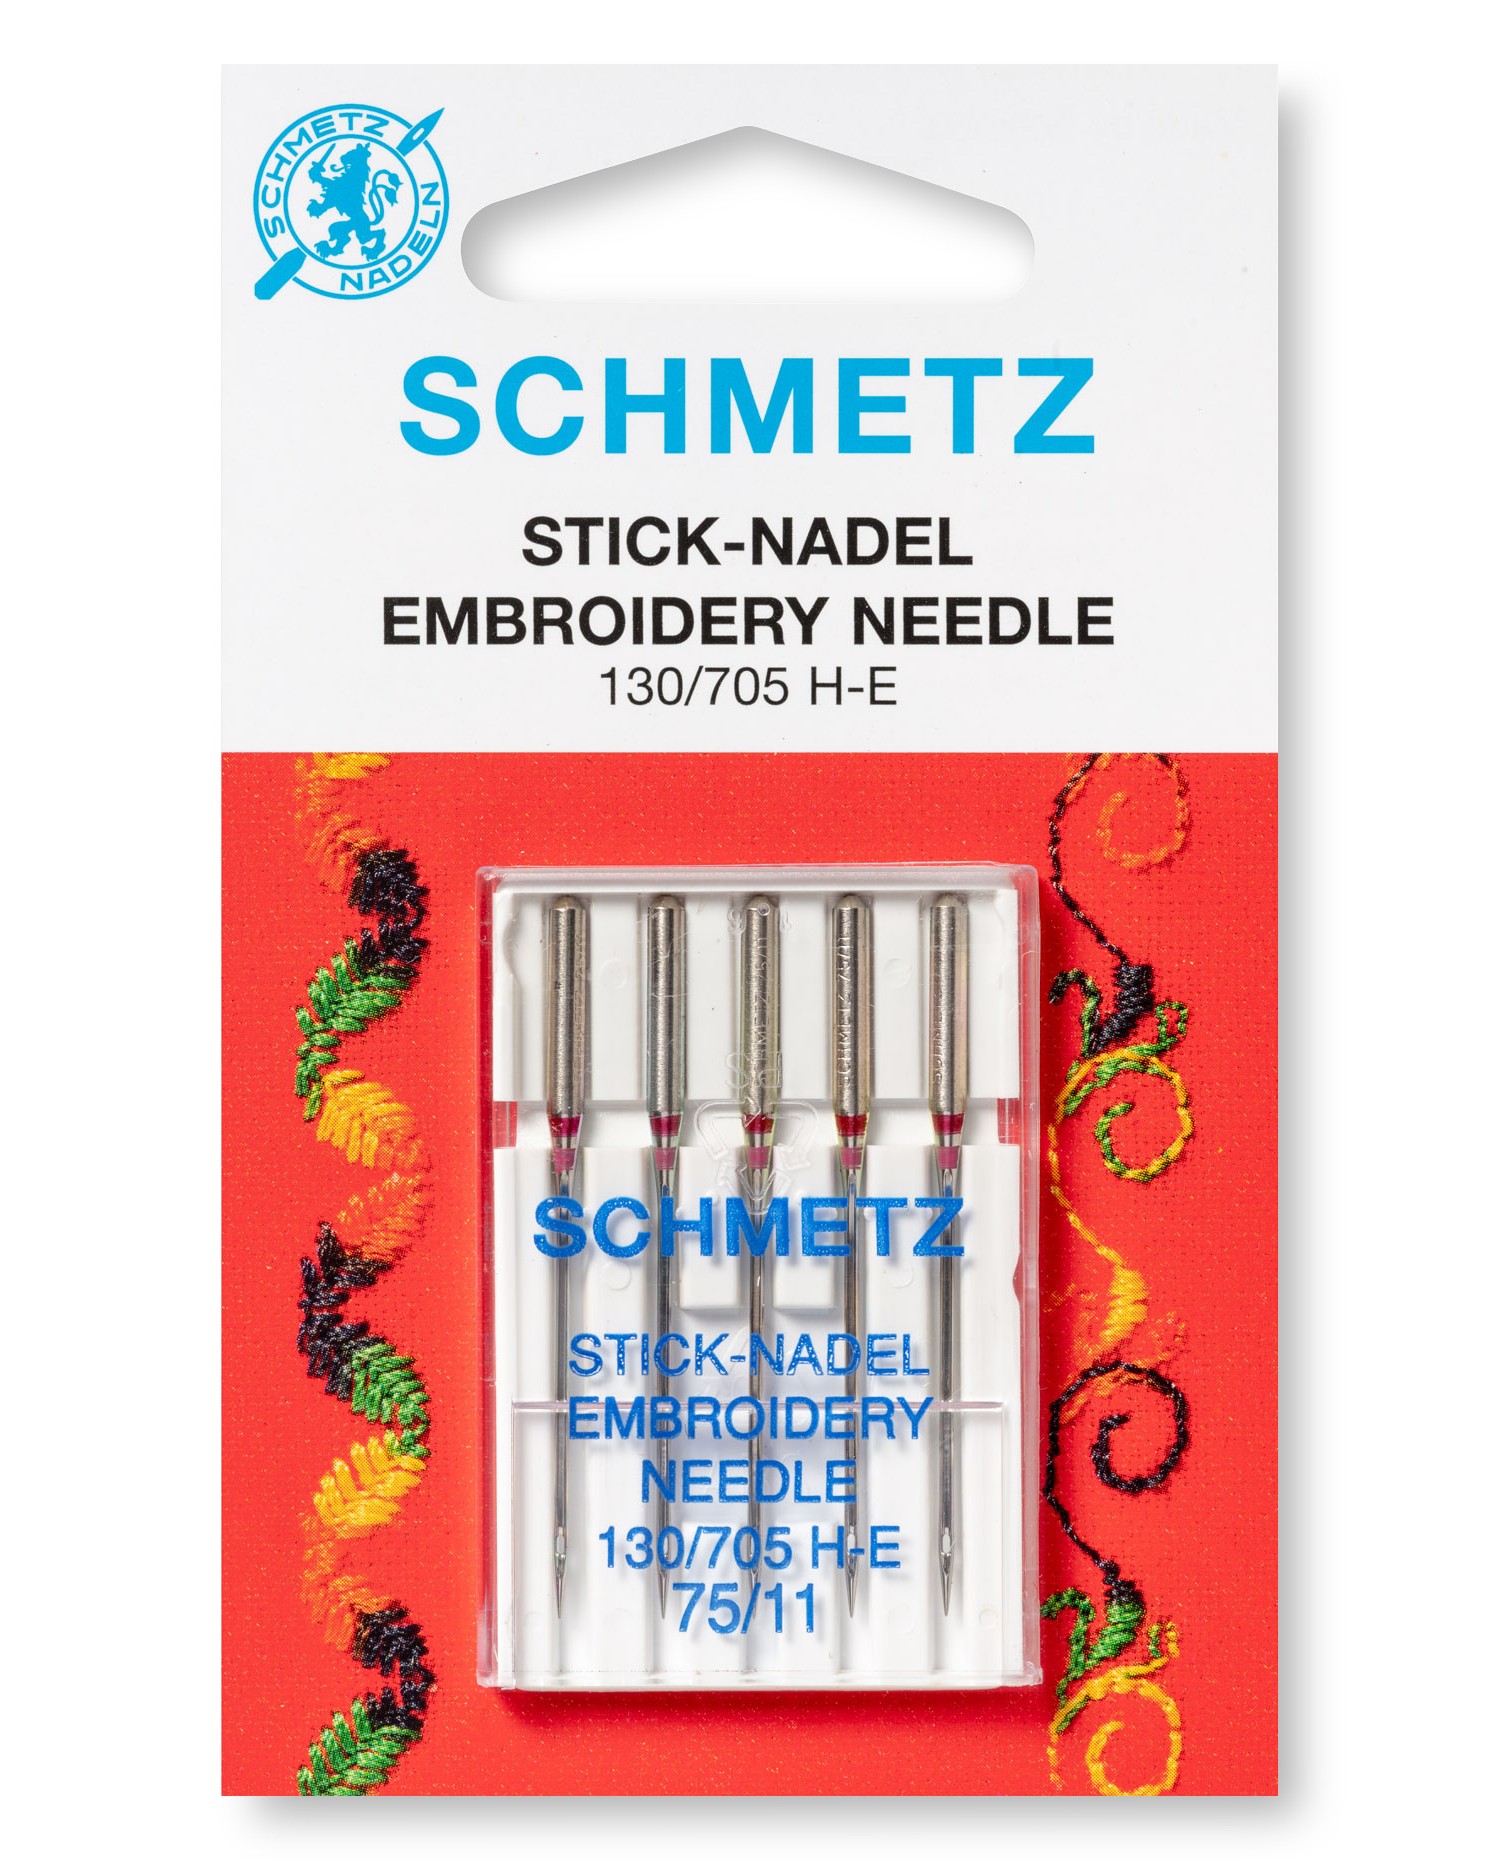 Schmetz Embroidery